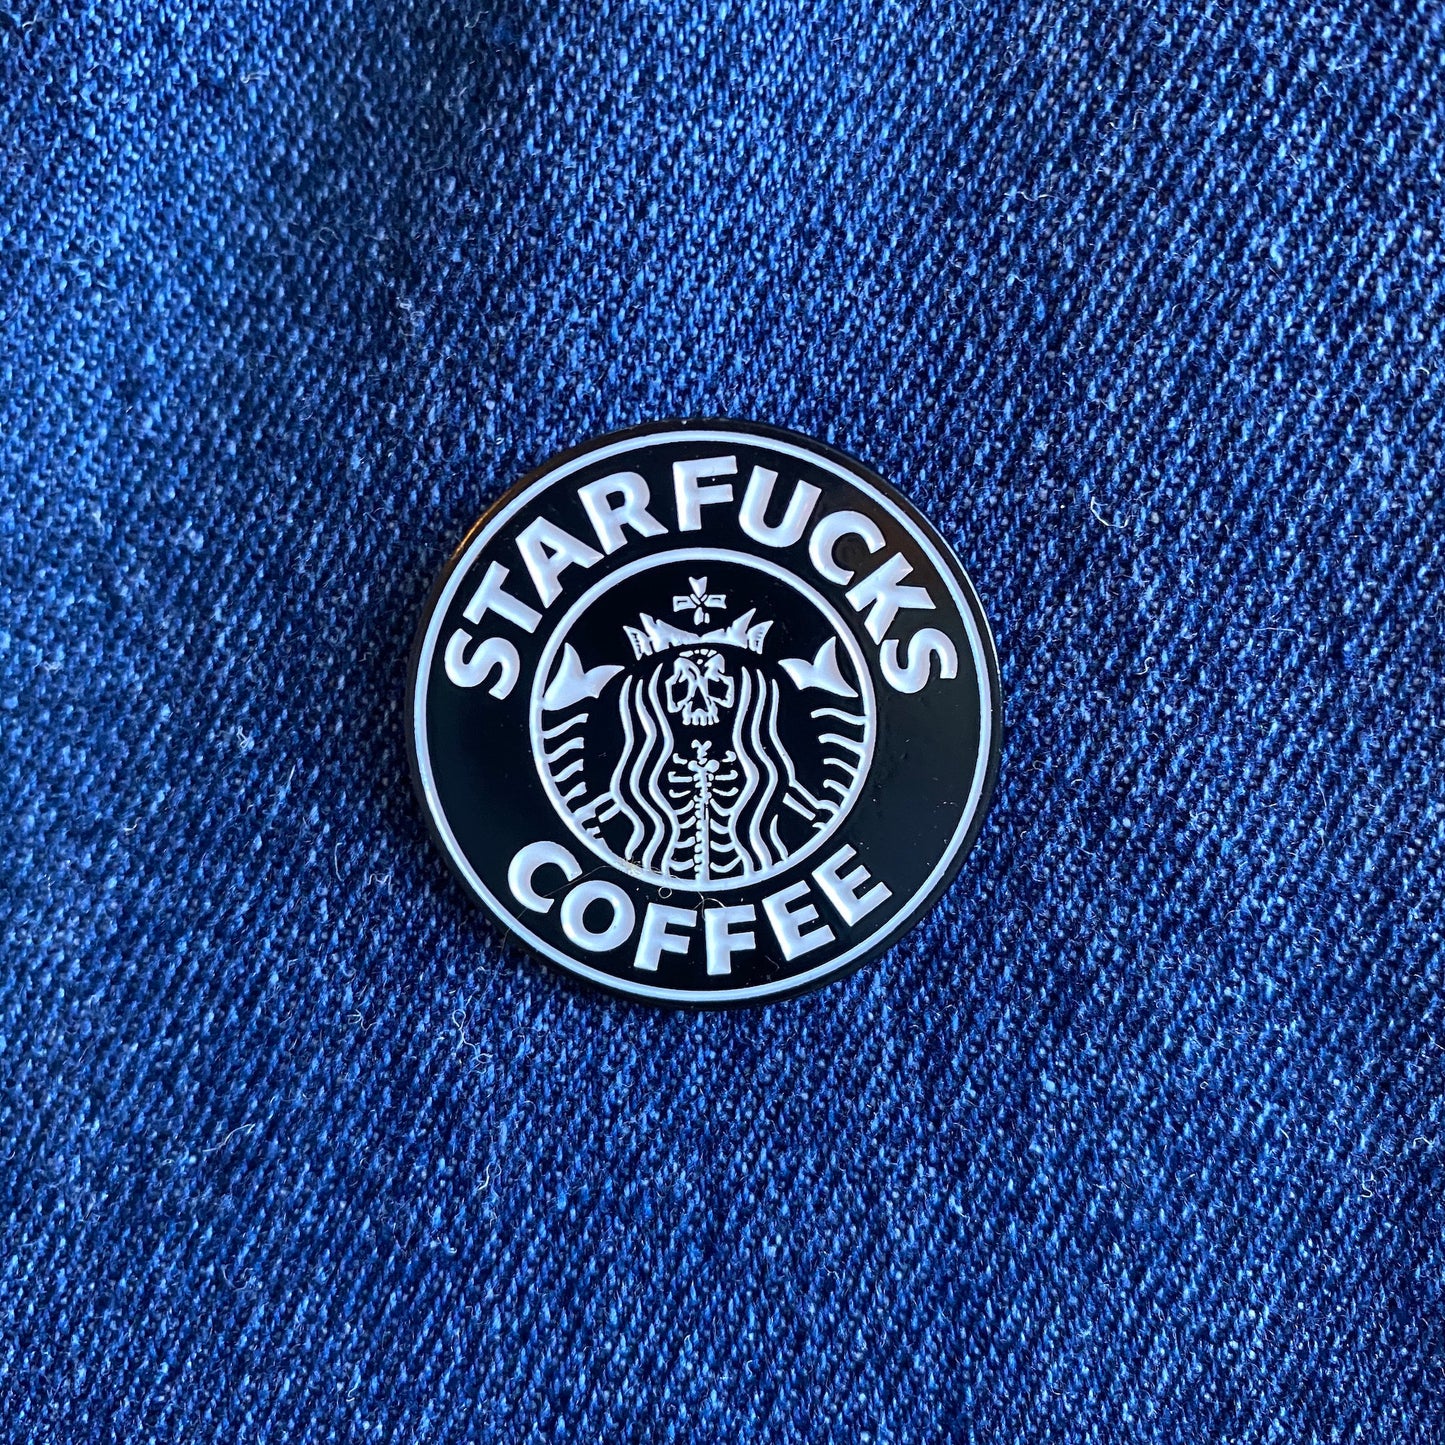 Starfucks Coffee - Absolutely No F***s Given Enamel Pin - thehappypin